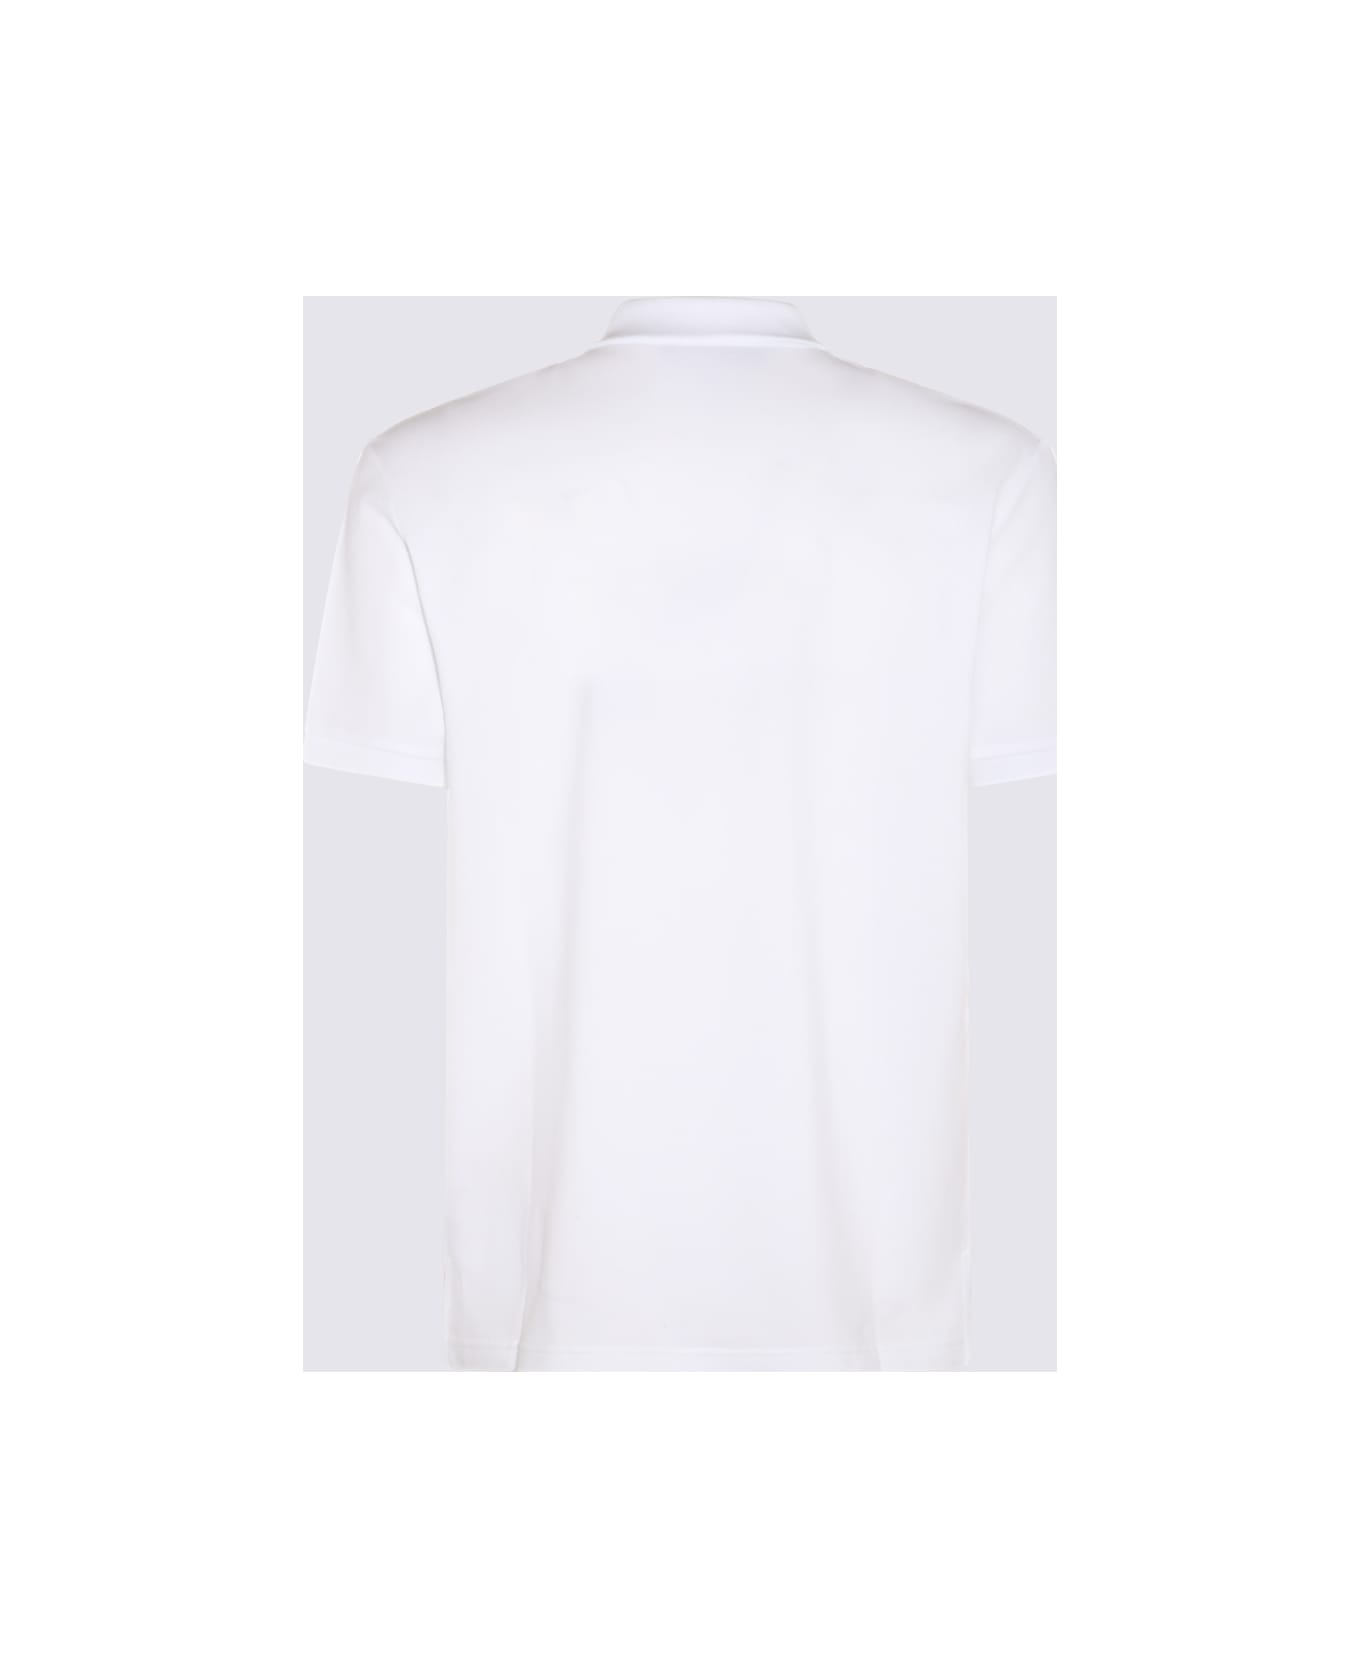 Moschino White Cotton T-shirt - White